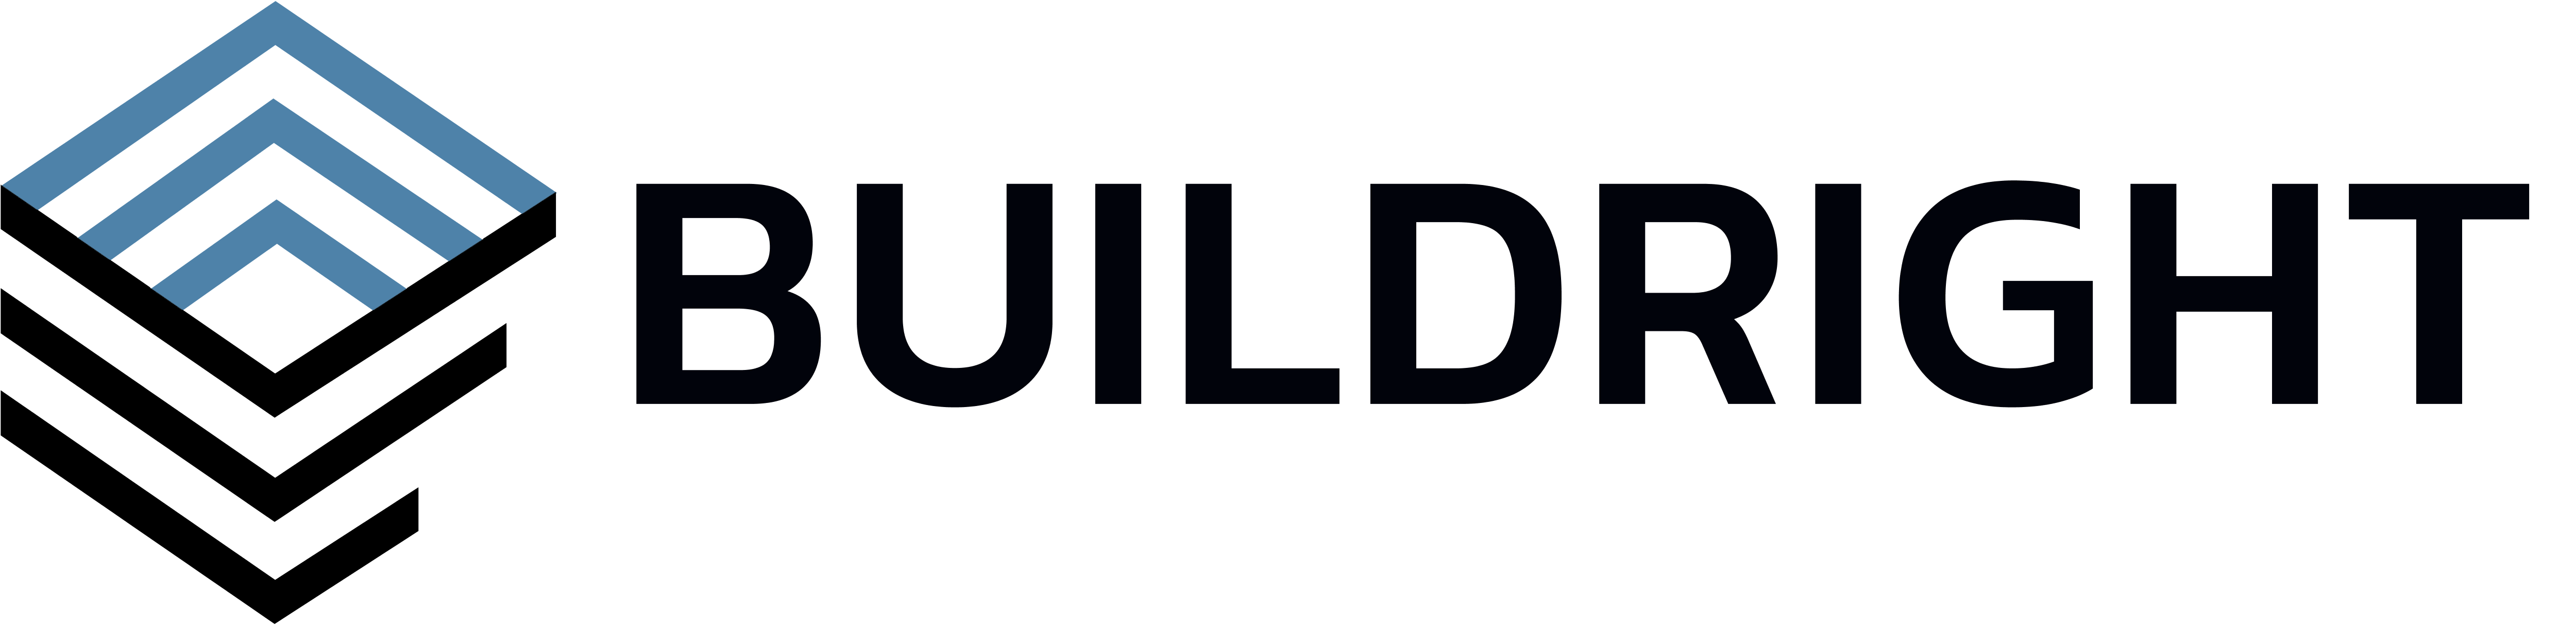 Buildright logo